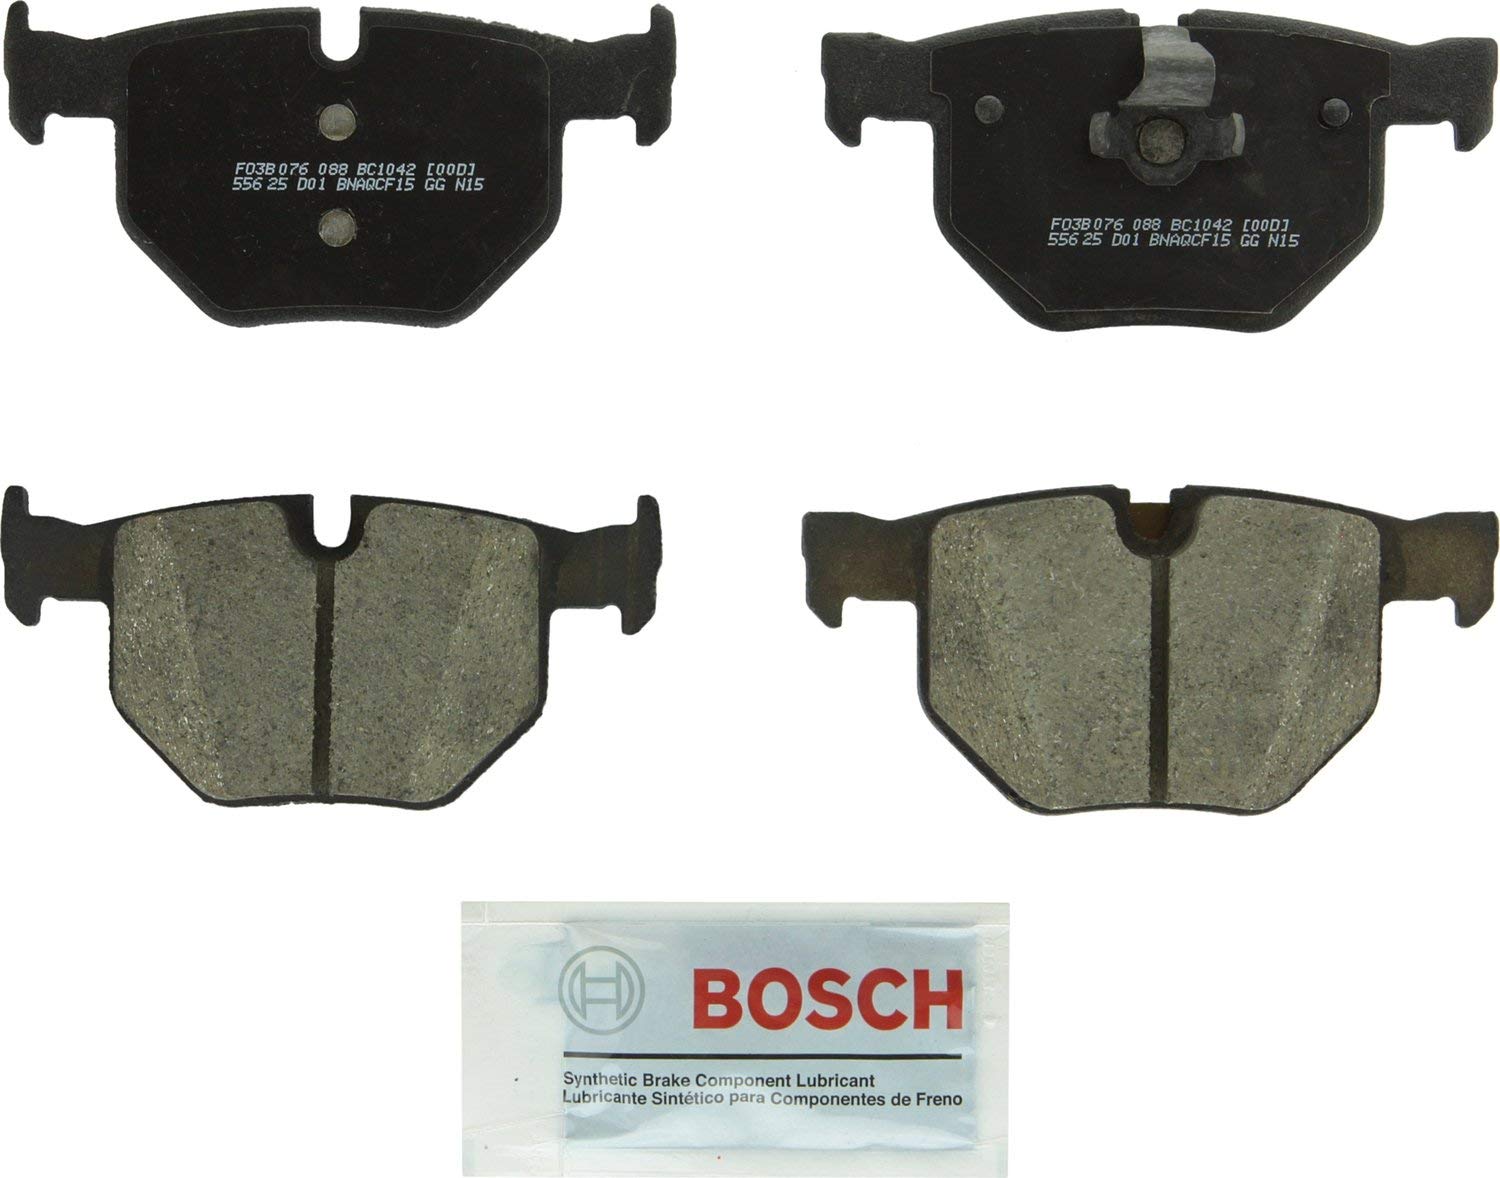 Bosch BC1042 QuietCast Premium Ceramic Disc Brake Pad Set For Select BMW 525i, 528i, 528i xDrive, 528xi, 530i, 530xi, 535i xDrive, 535xi, X5, X6; Rear